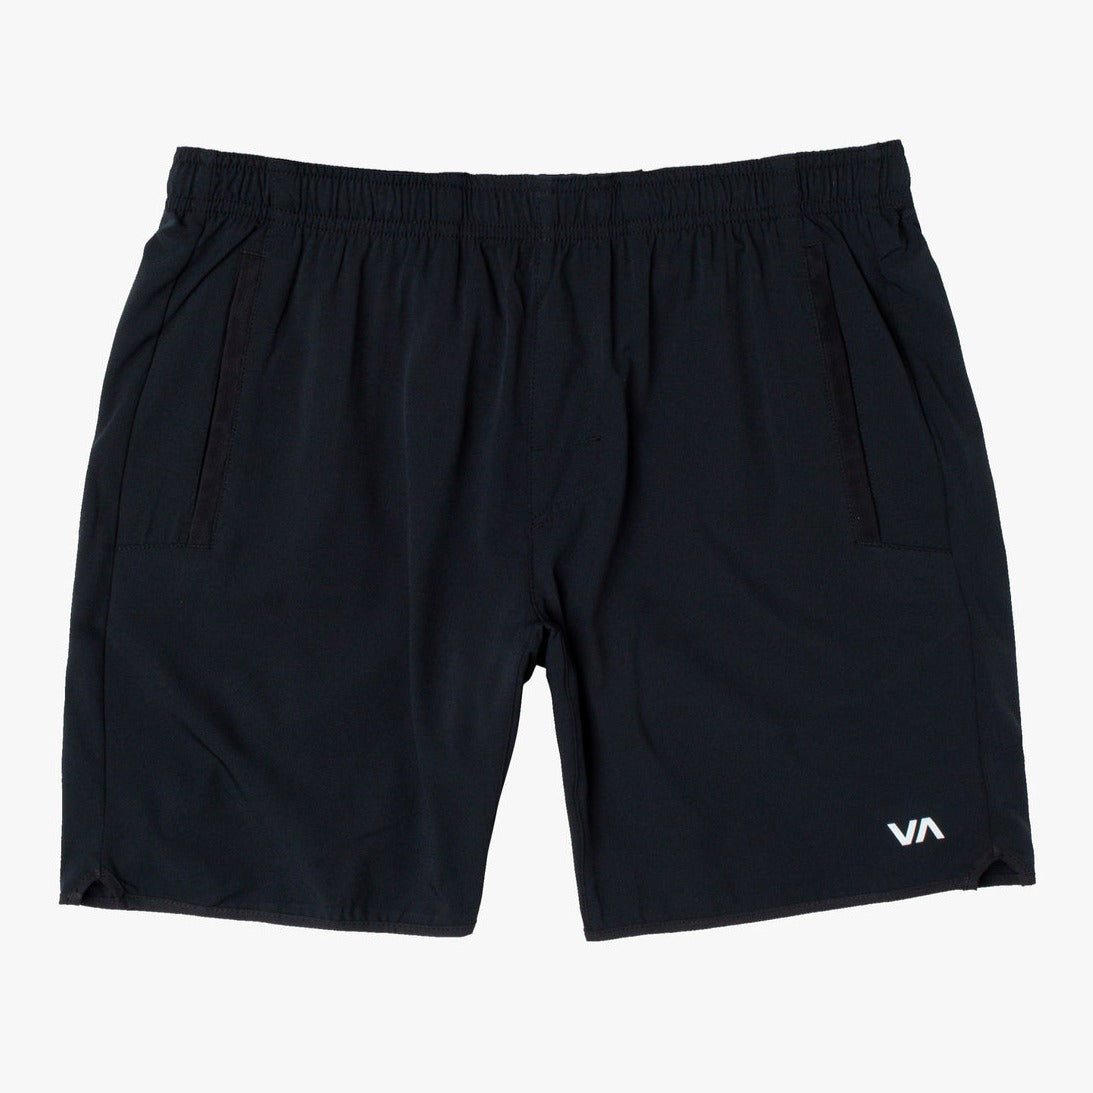 Mens Short - RVCA Yogger Stretch Athletic Shorts